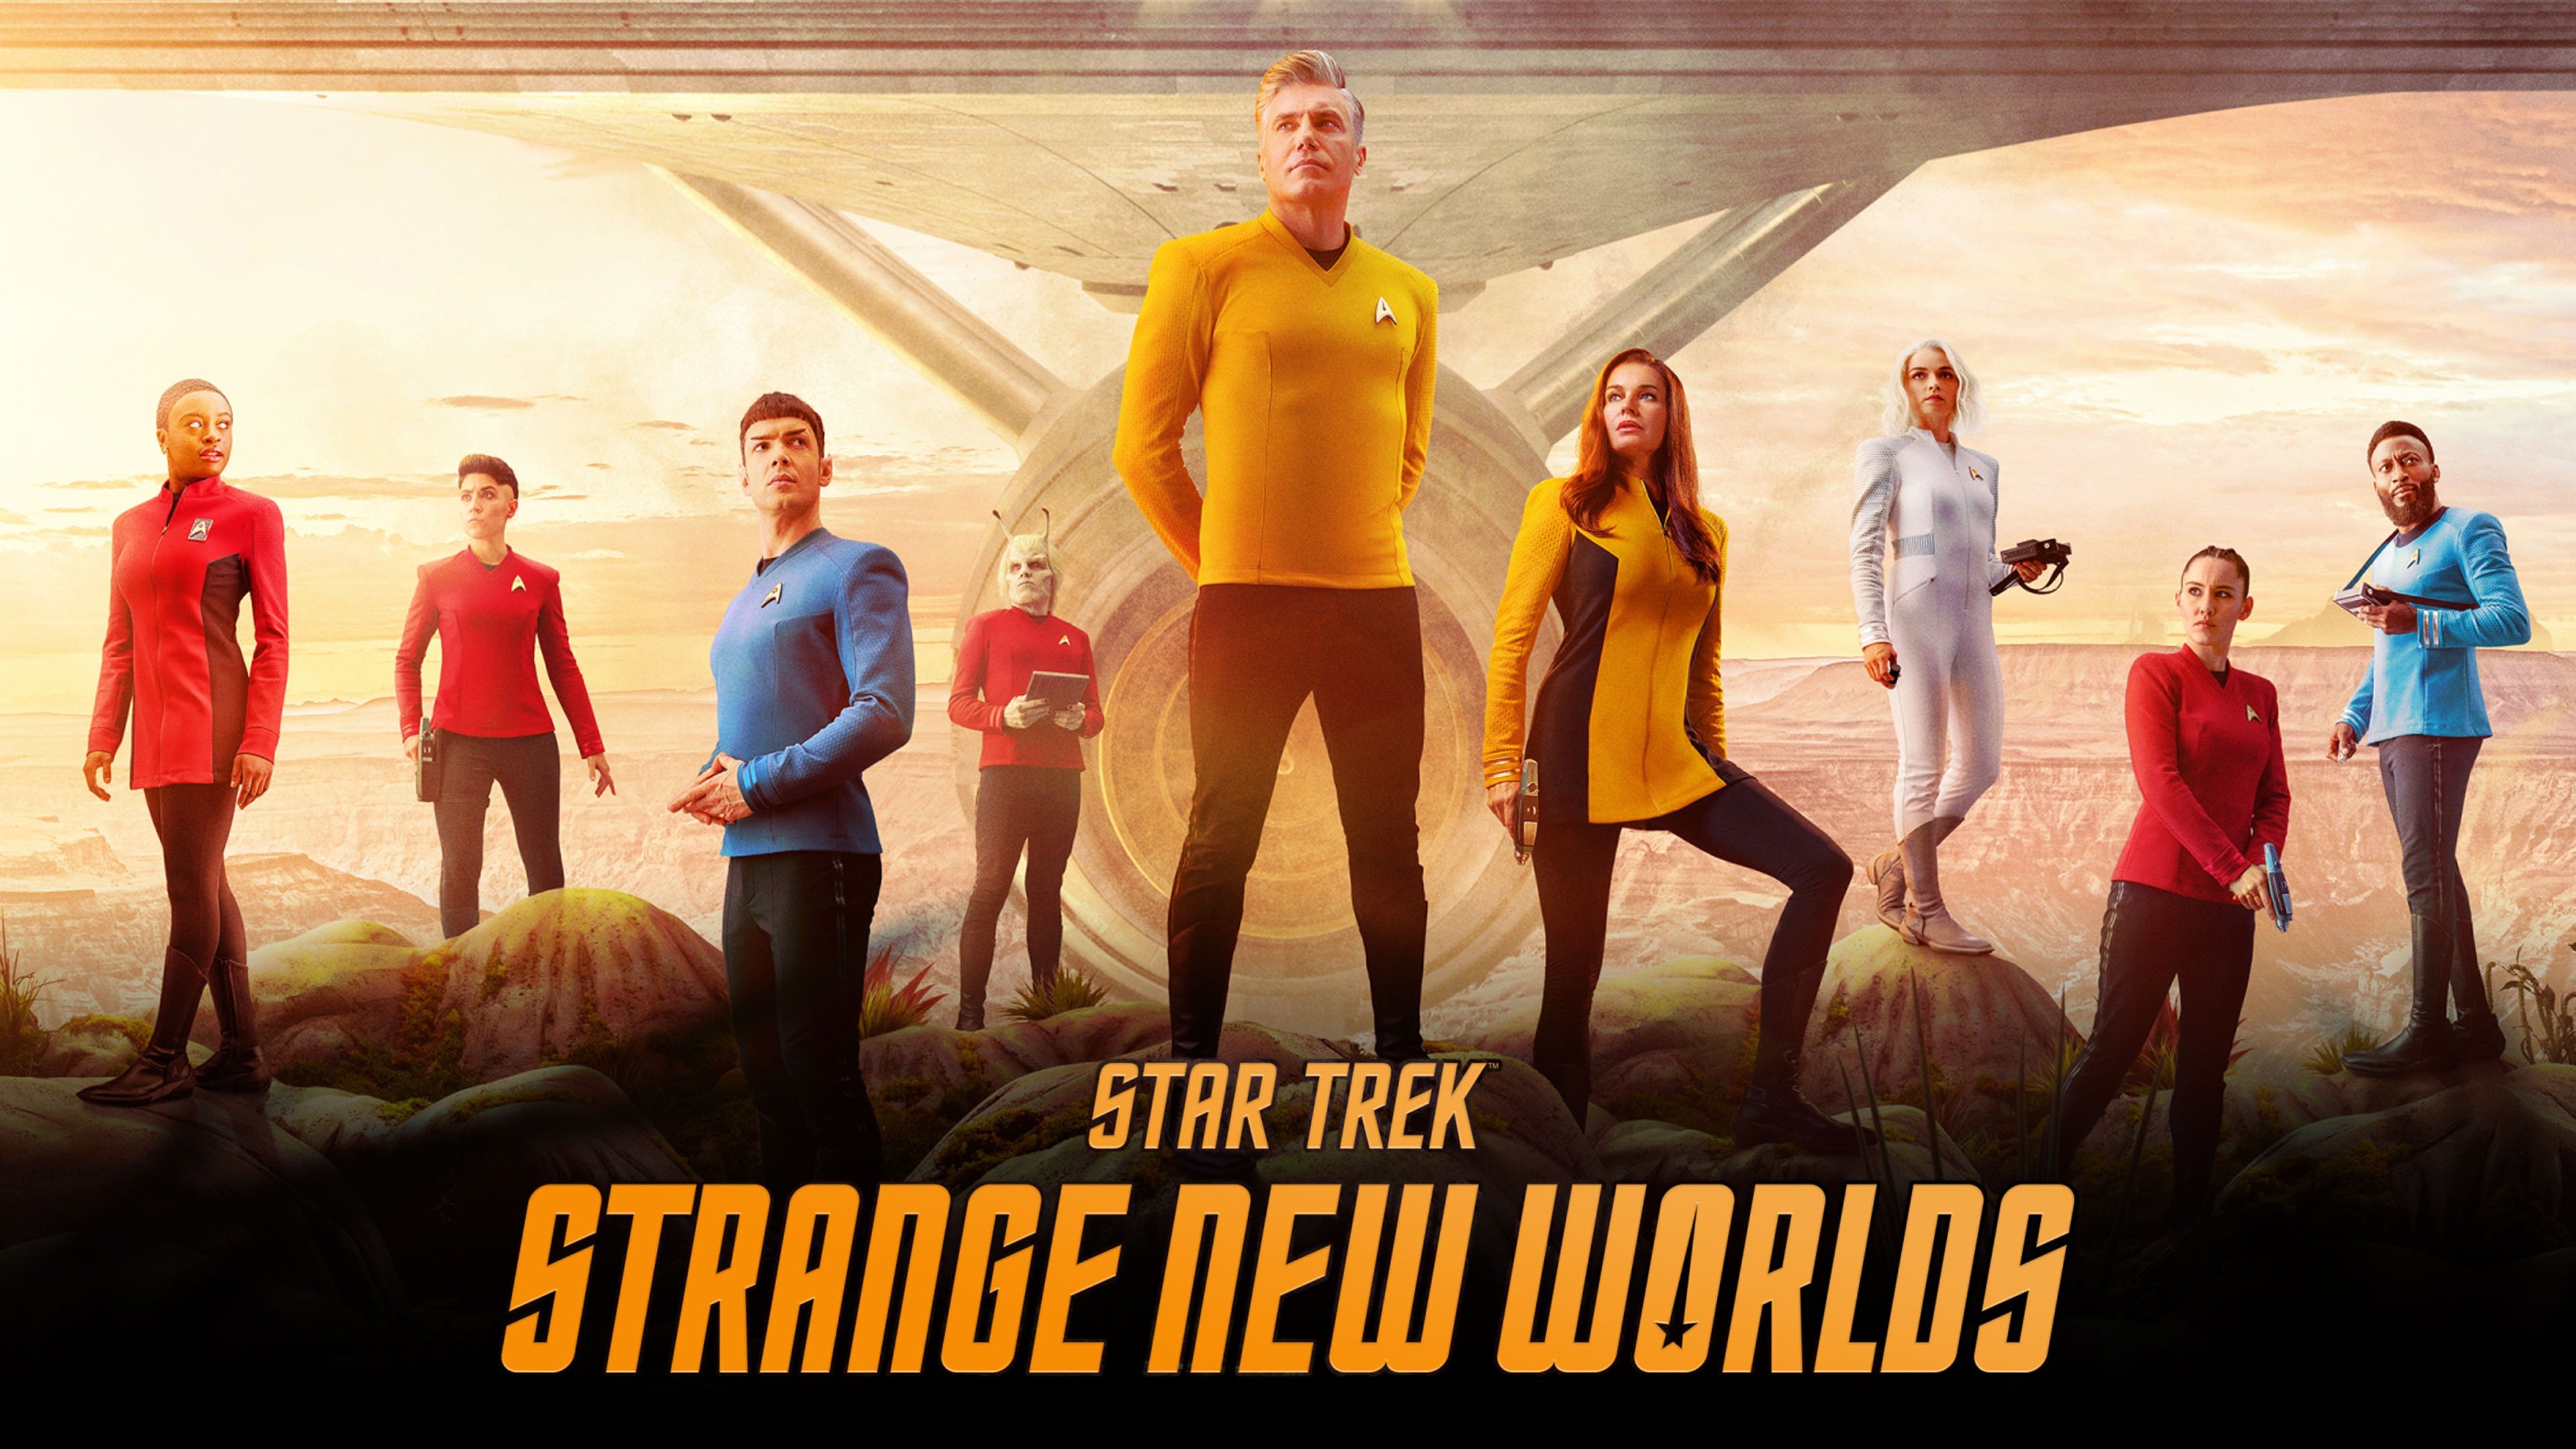 Serie Tv Star Trek: Strange New Worlds, seconda stagione - il rilascio